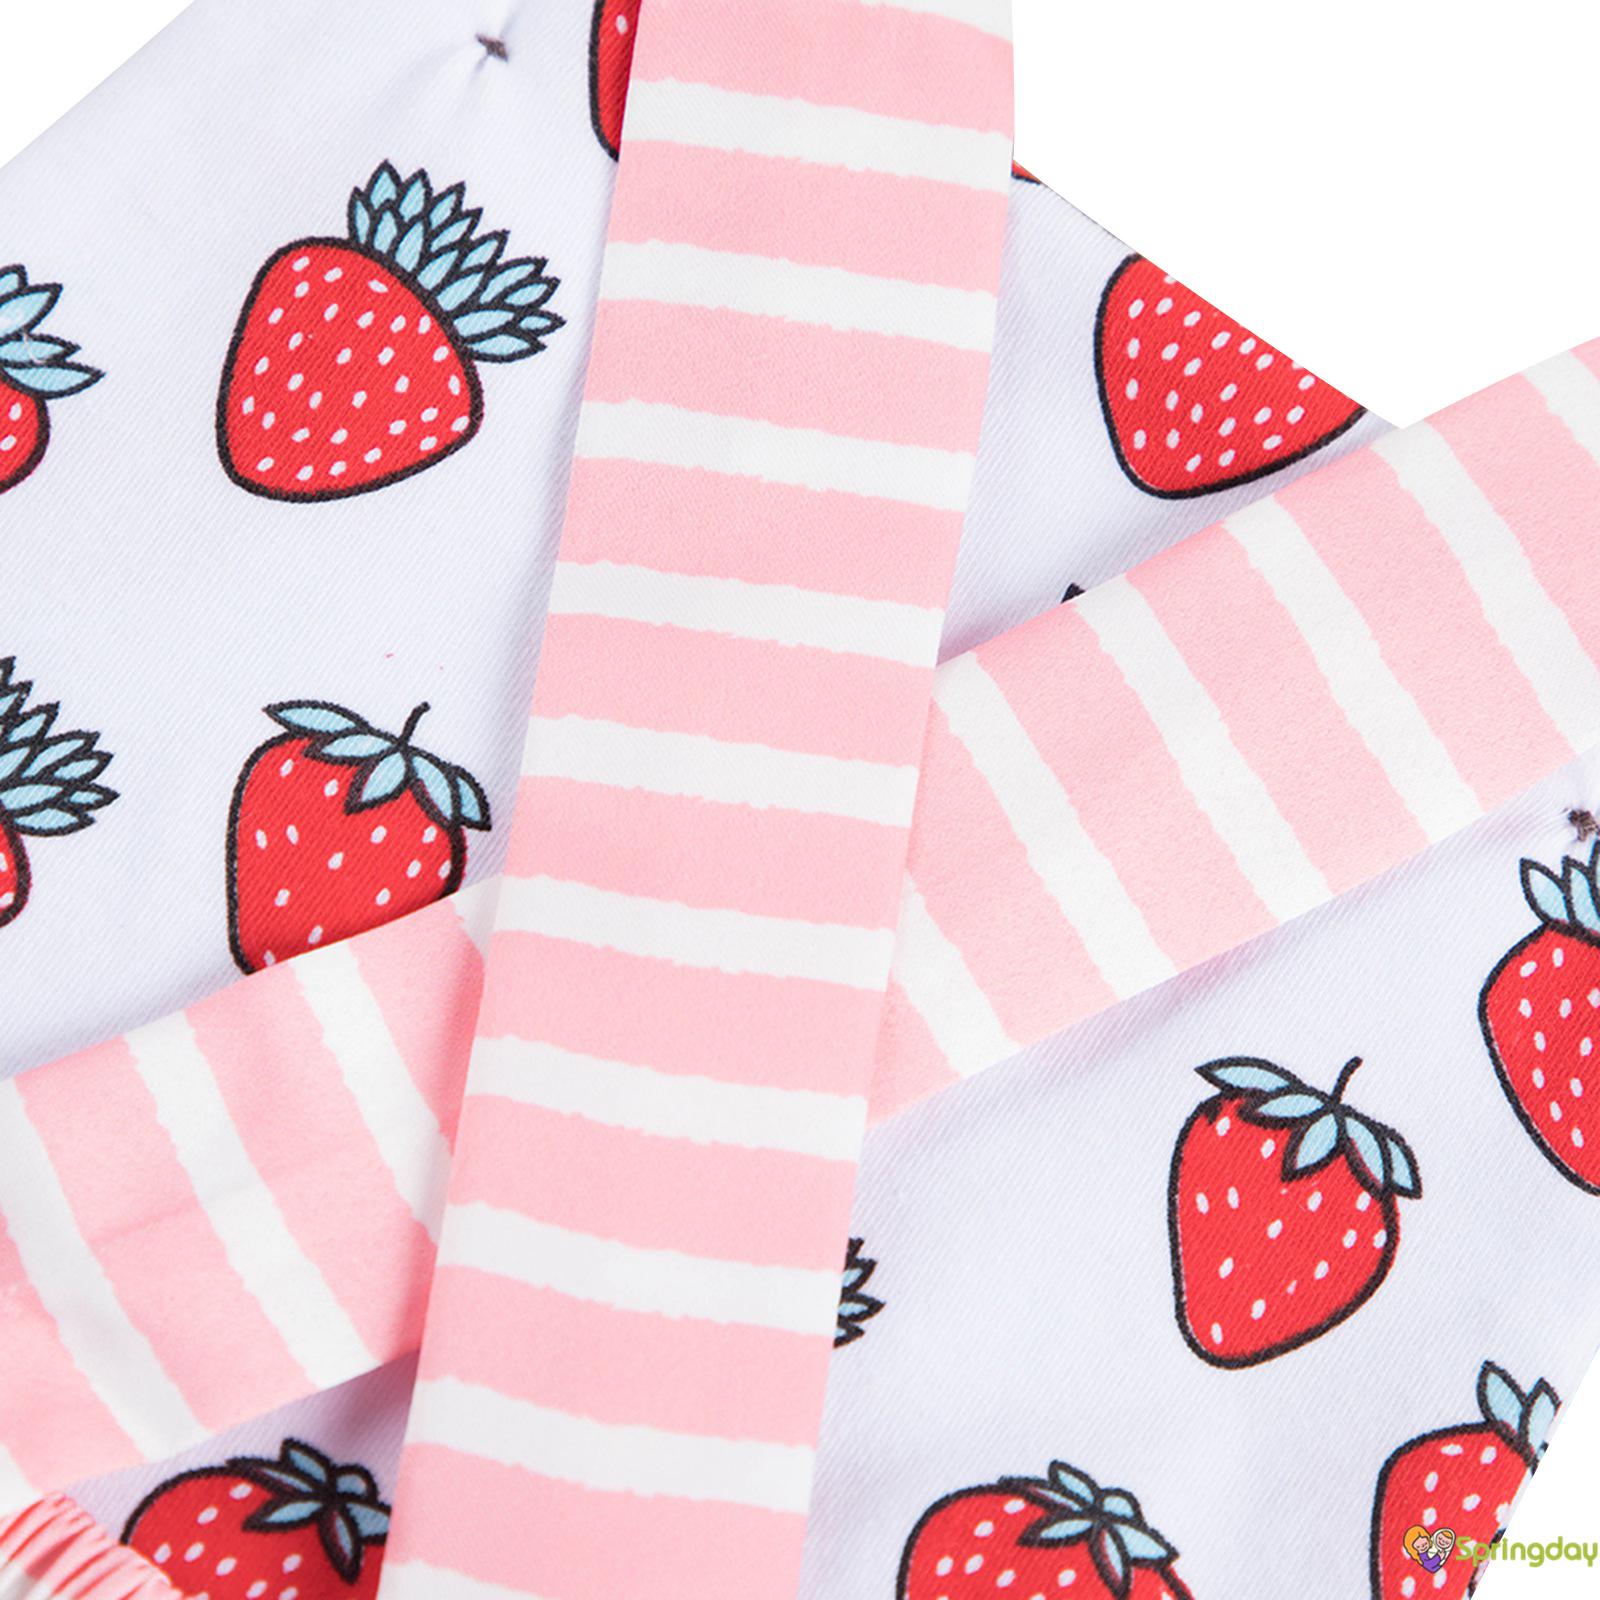 SPRINGDAY-Baby Strawberry Print Short Romper, Girls Sleeveless Square Collar Backless Jumpsuit for Summer